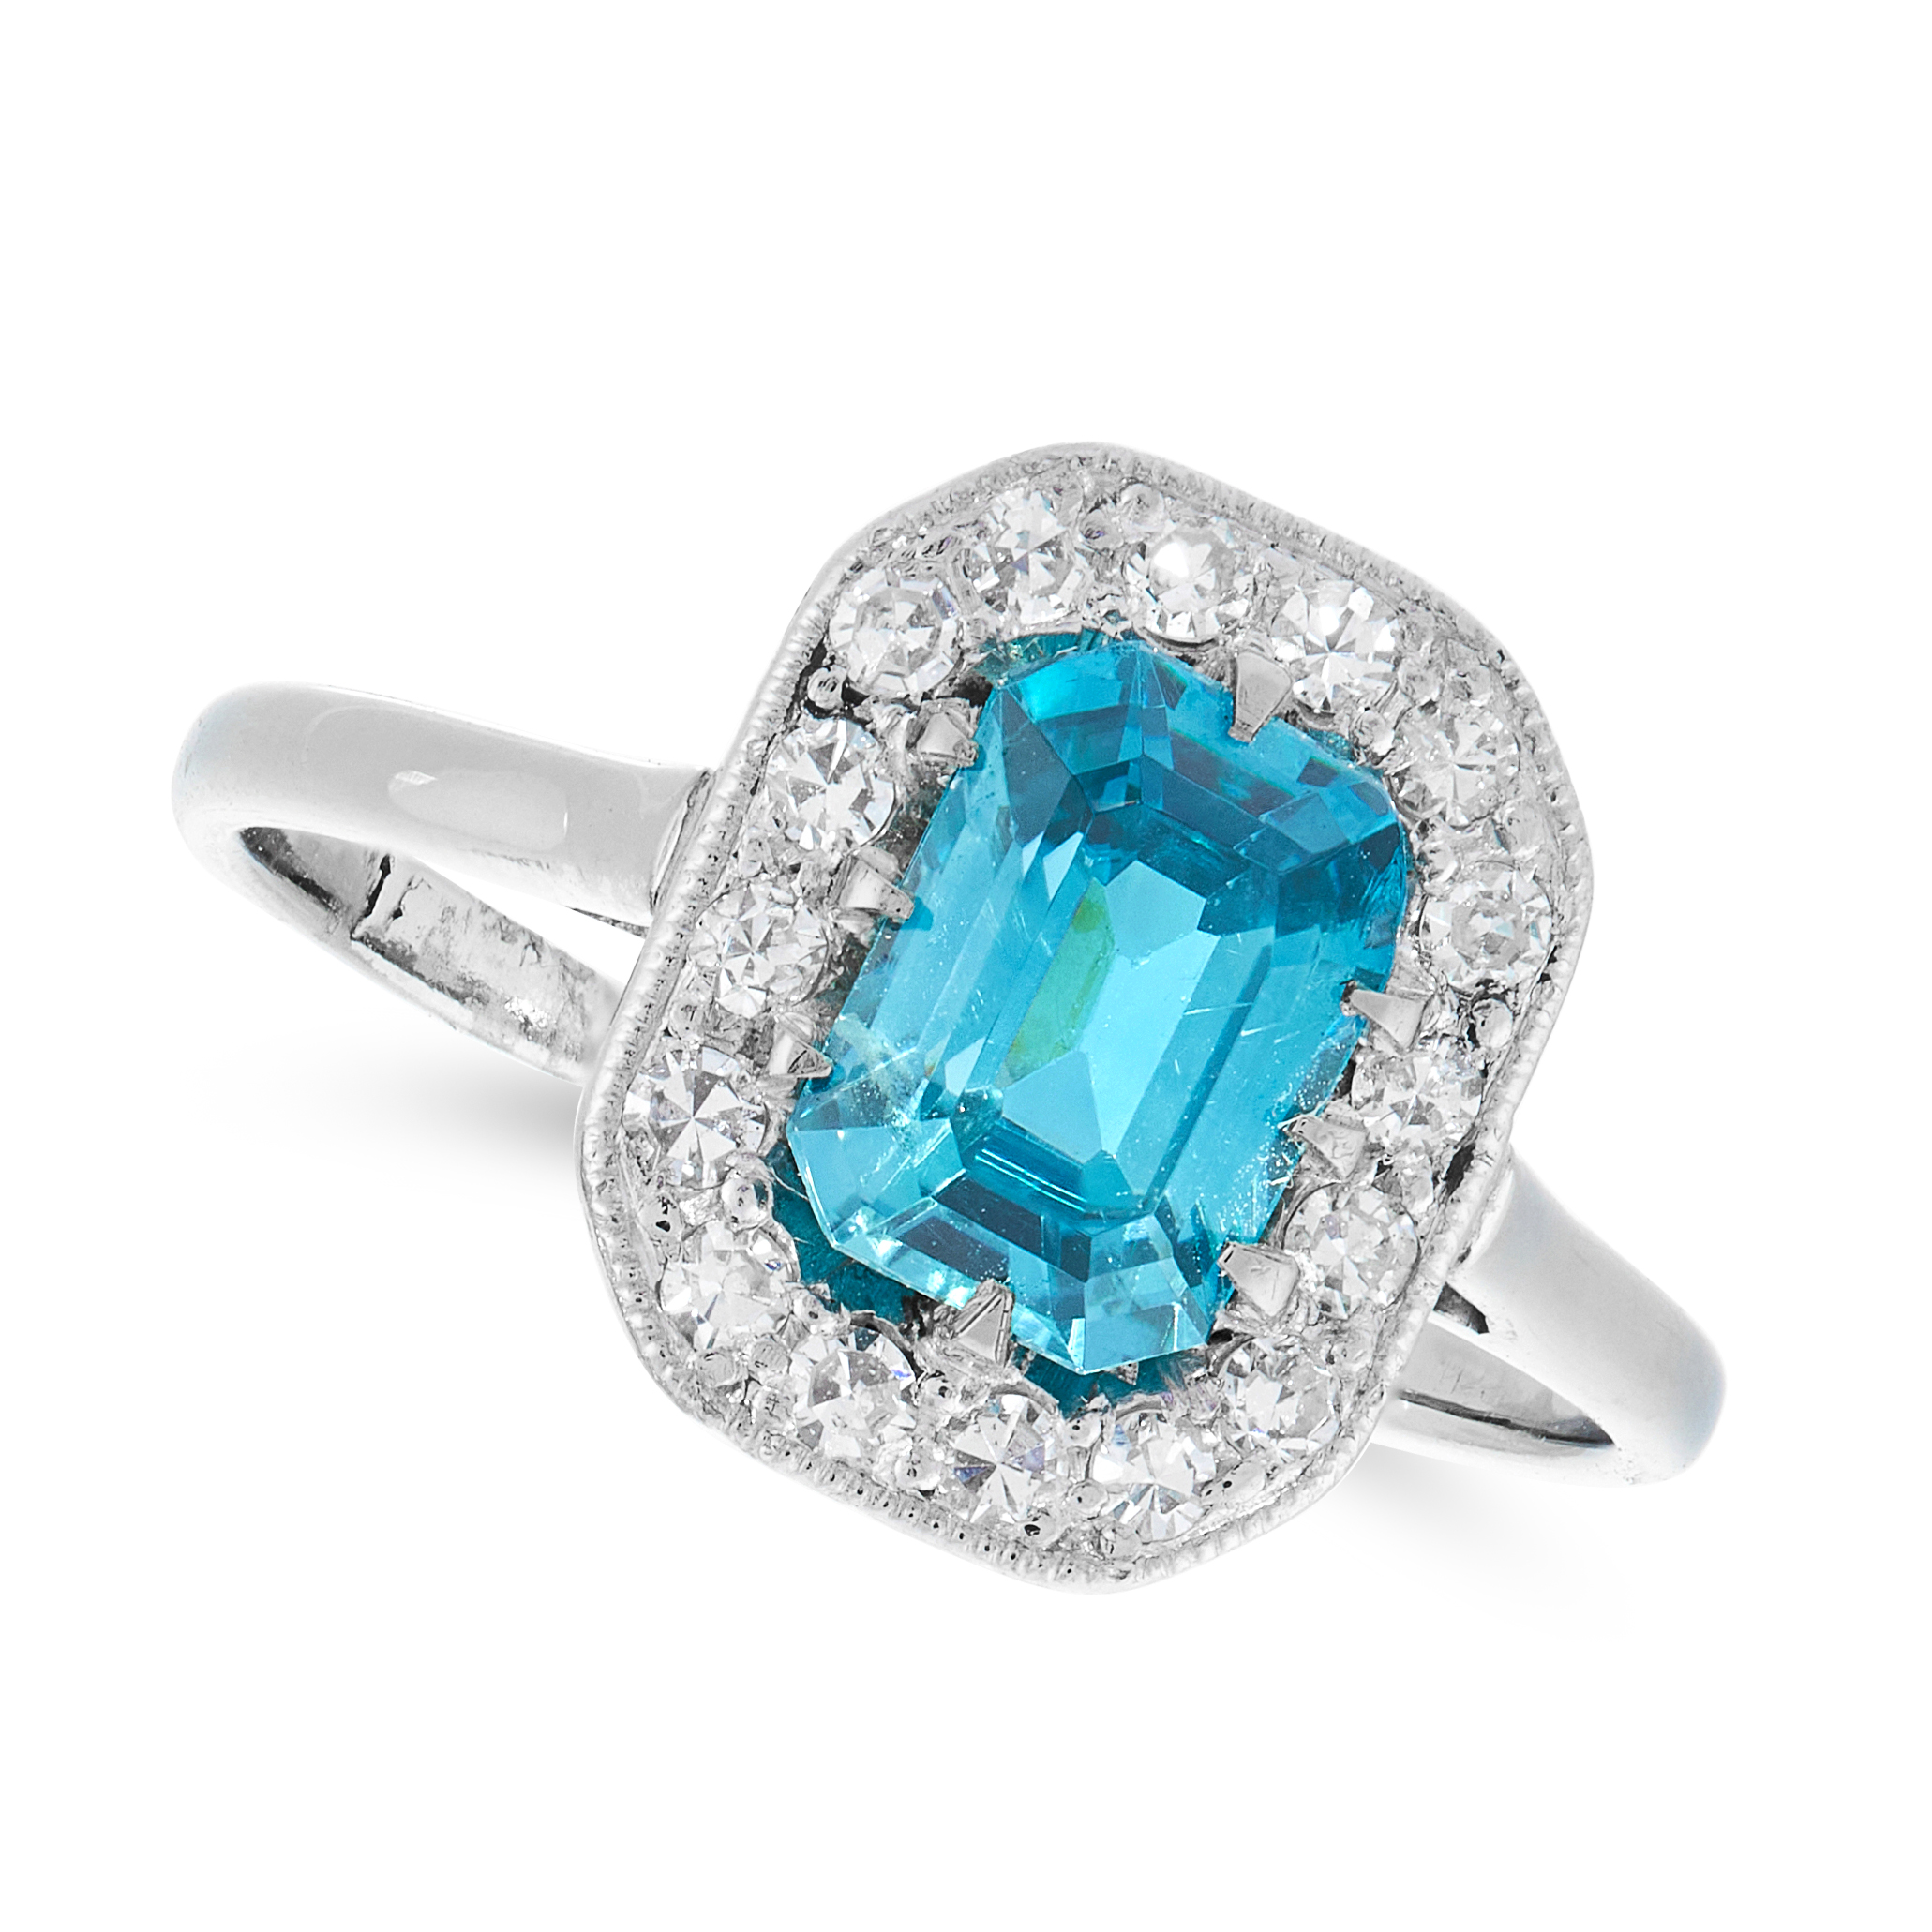 A BLUE ZIRCON AND DIAMOND DRESS RING, CIRCA 1930 set with an emerald cut blue zircon of 1.87 carats,